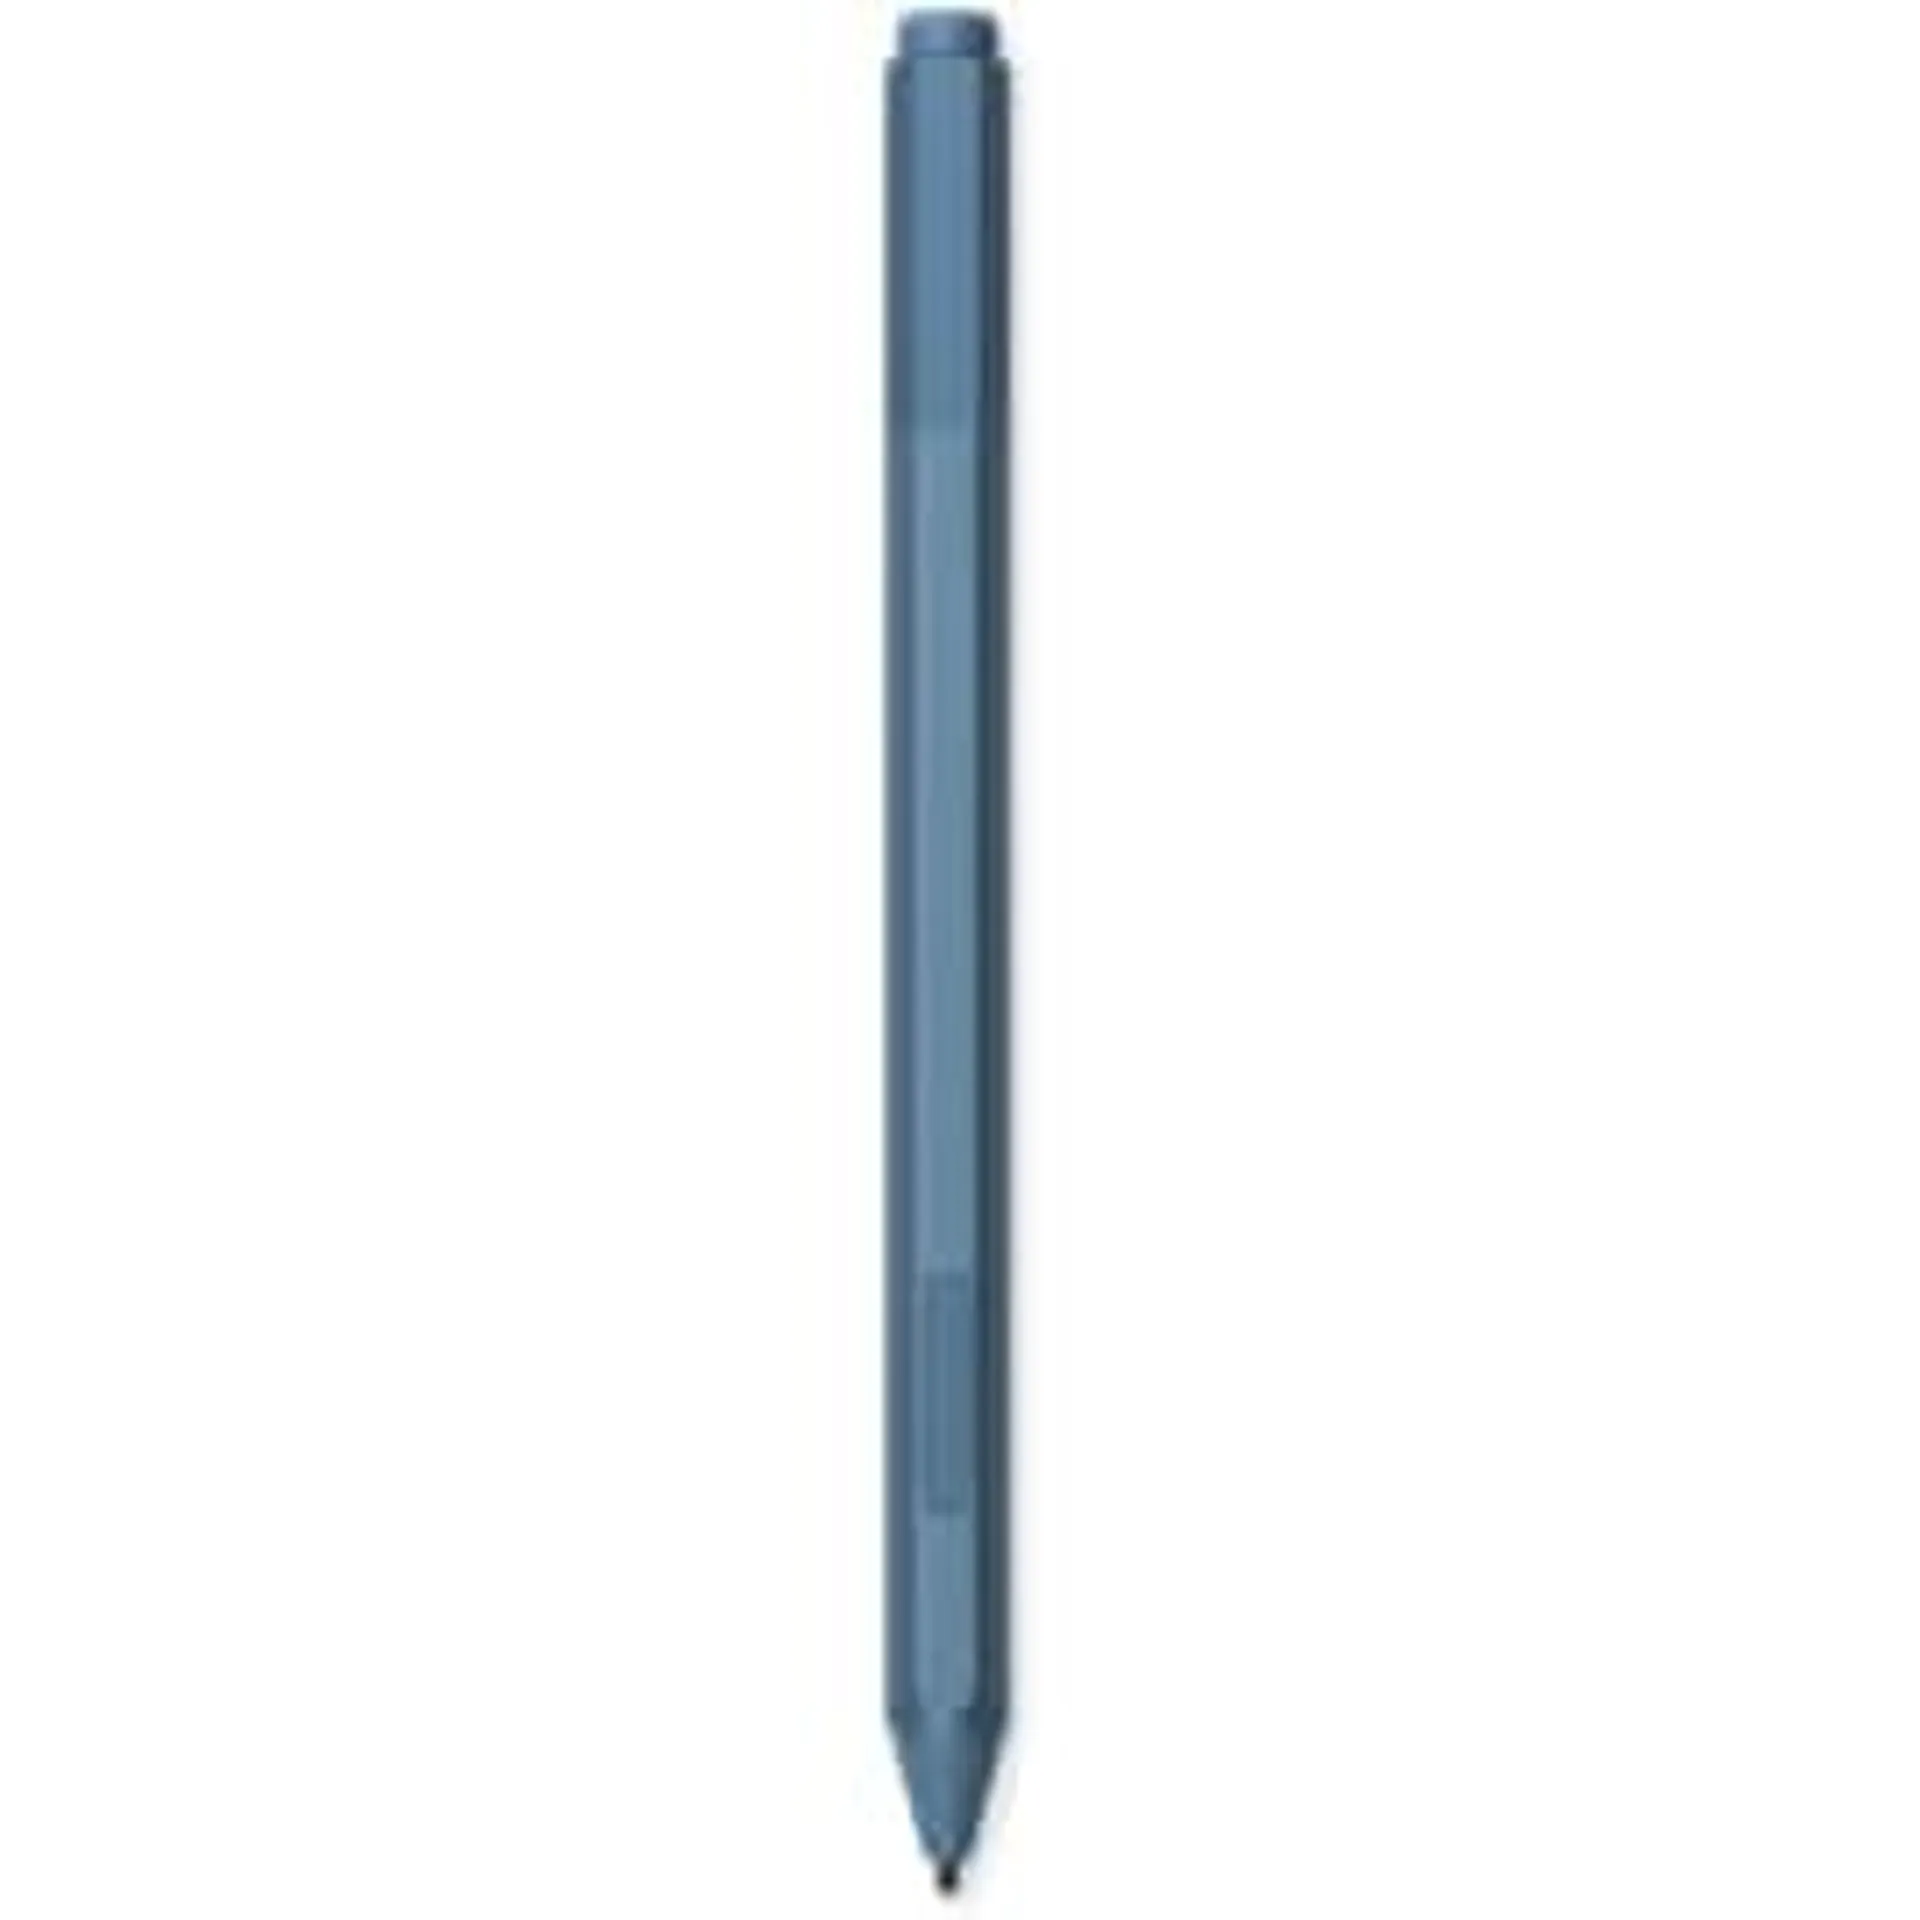 Surface Pen - Ice Blue